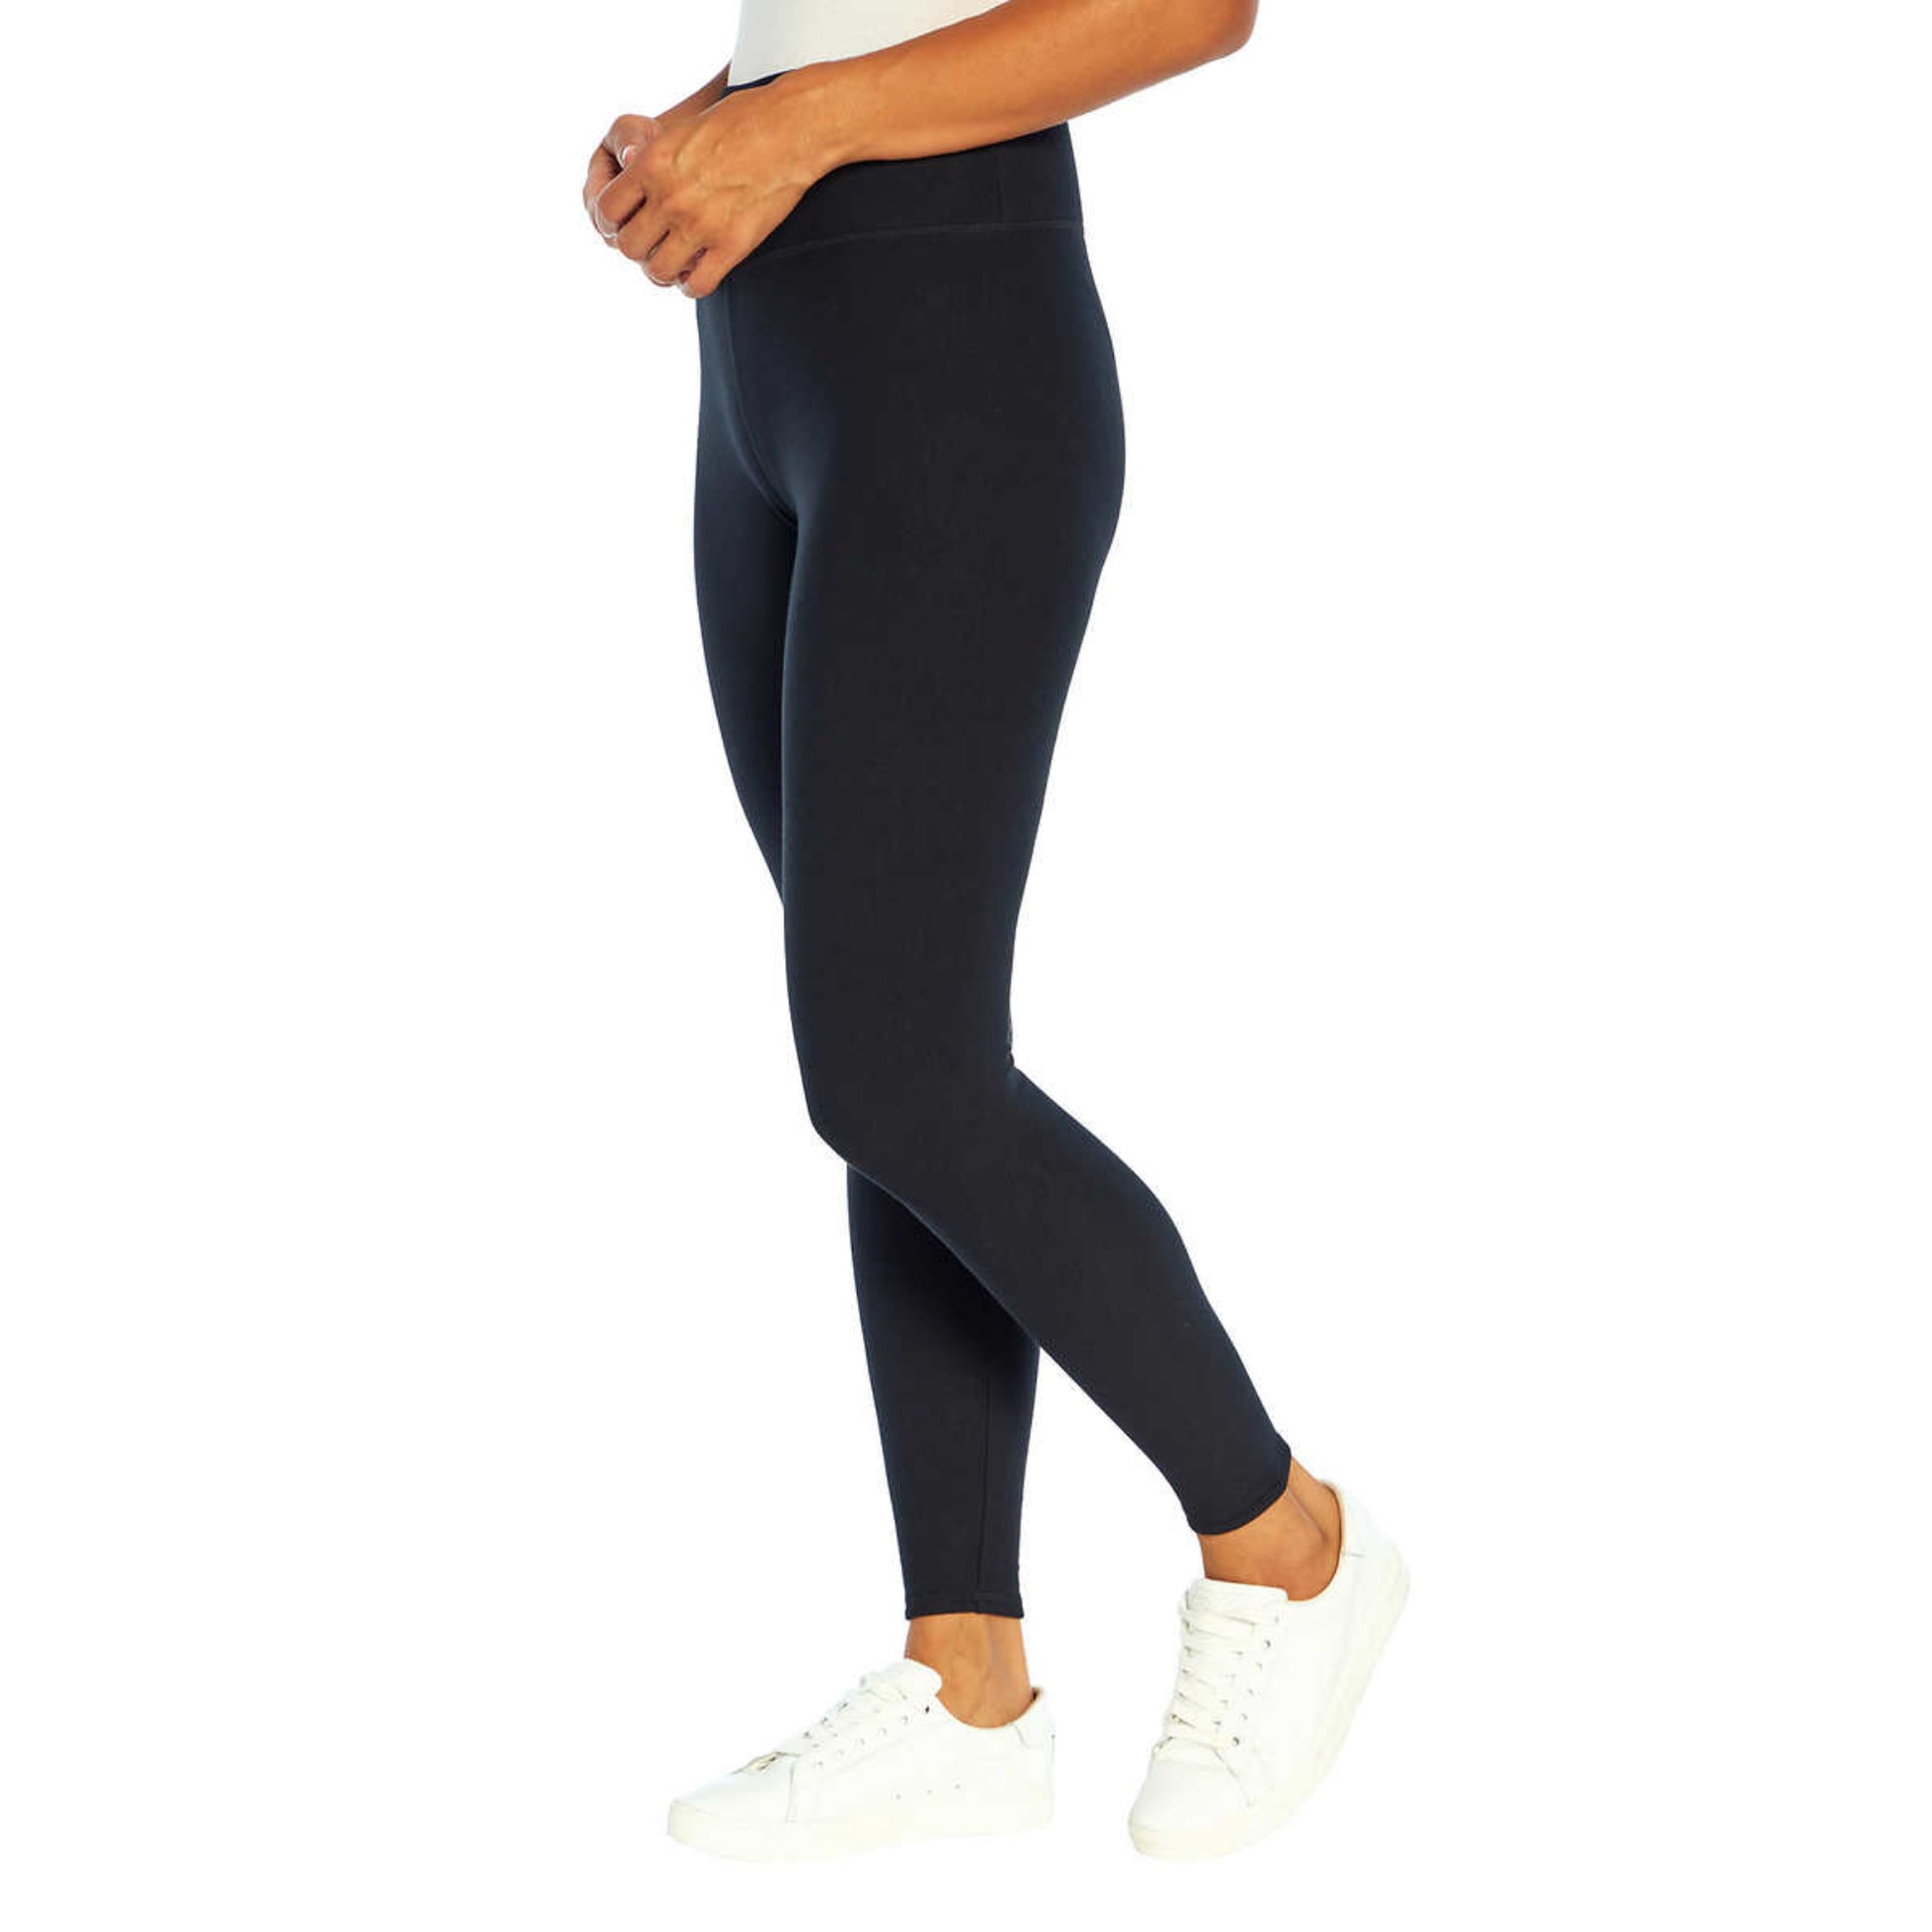 Womens Medium Black Danskin Yoga Pants